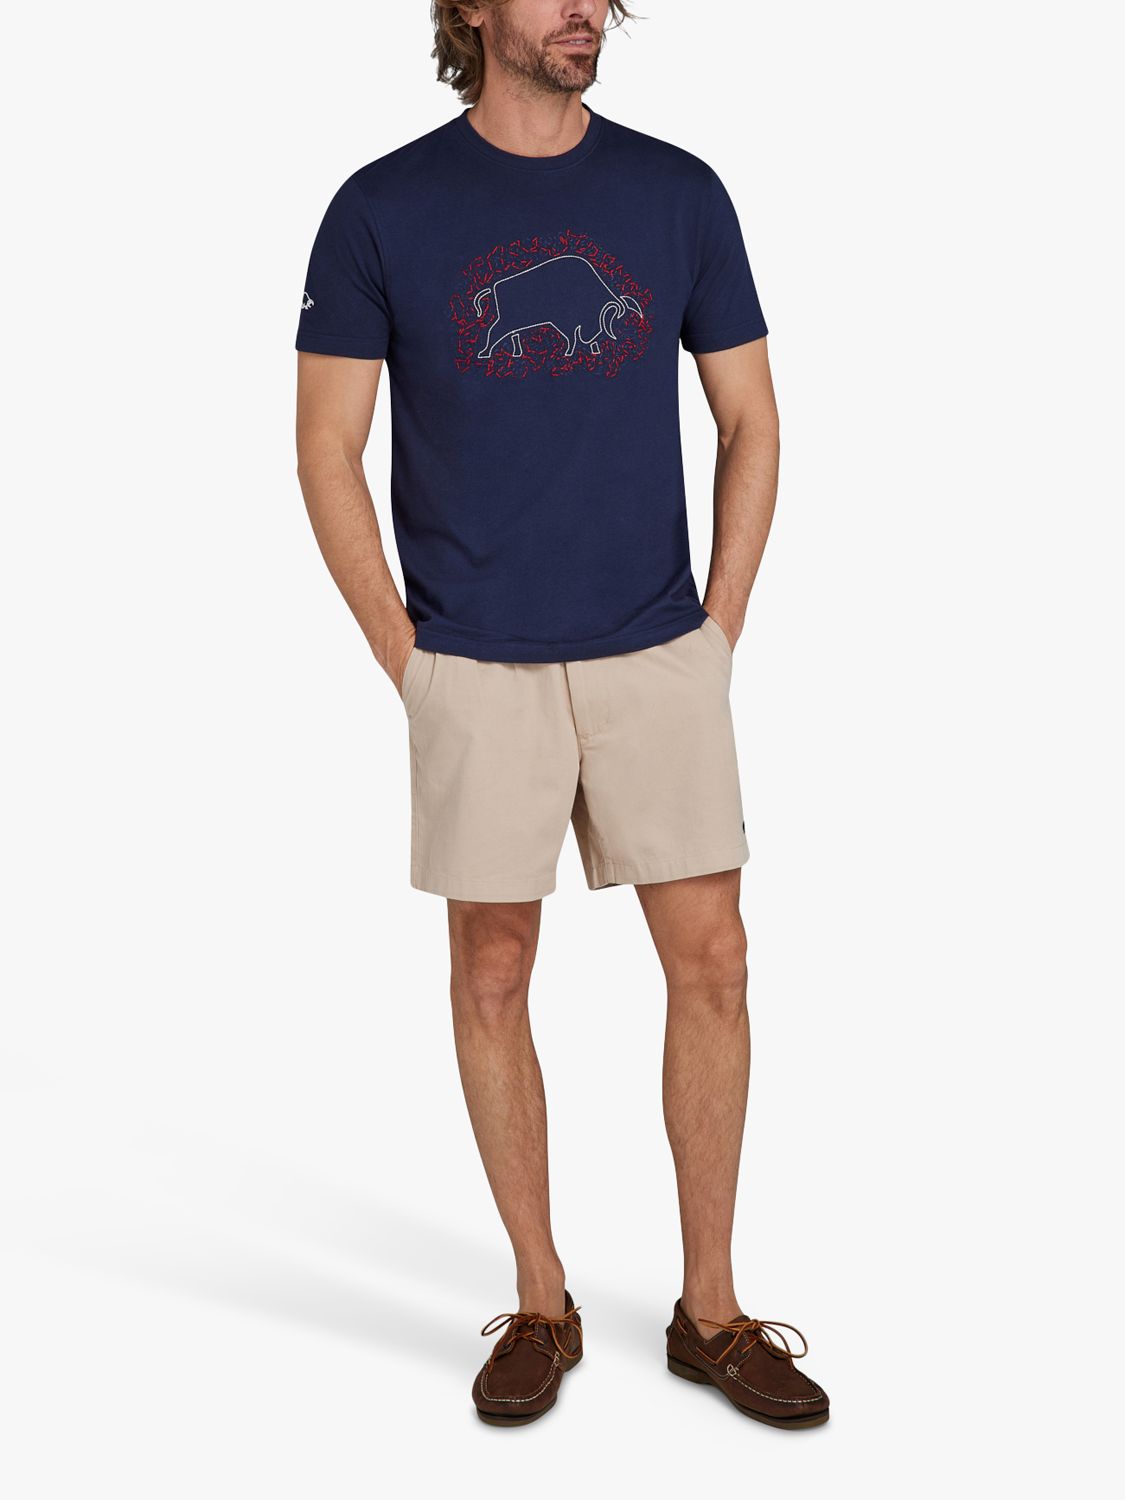 Raging Bull Scatter Stitch Bull T-Shirt, Navy/Multi, XL